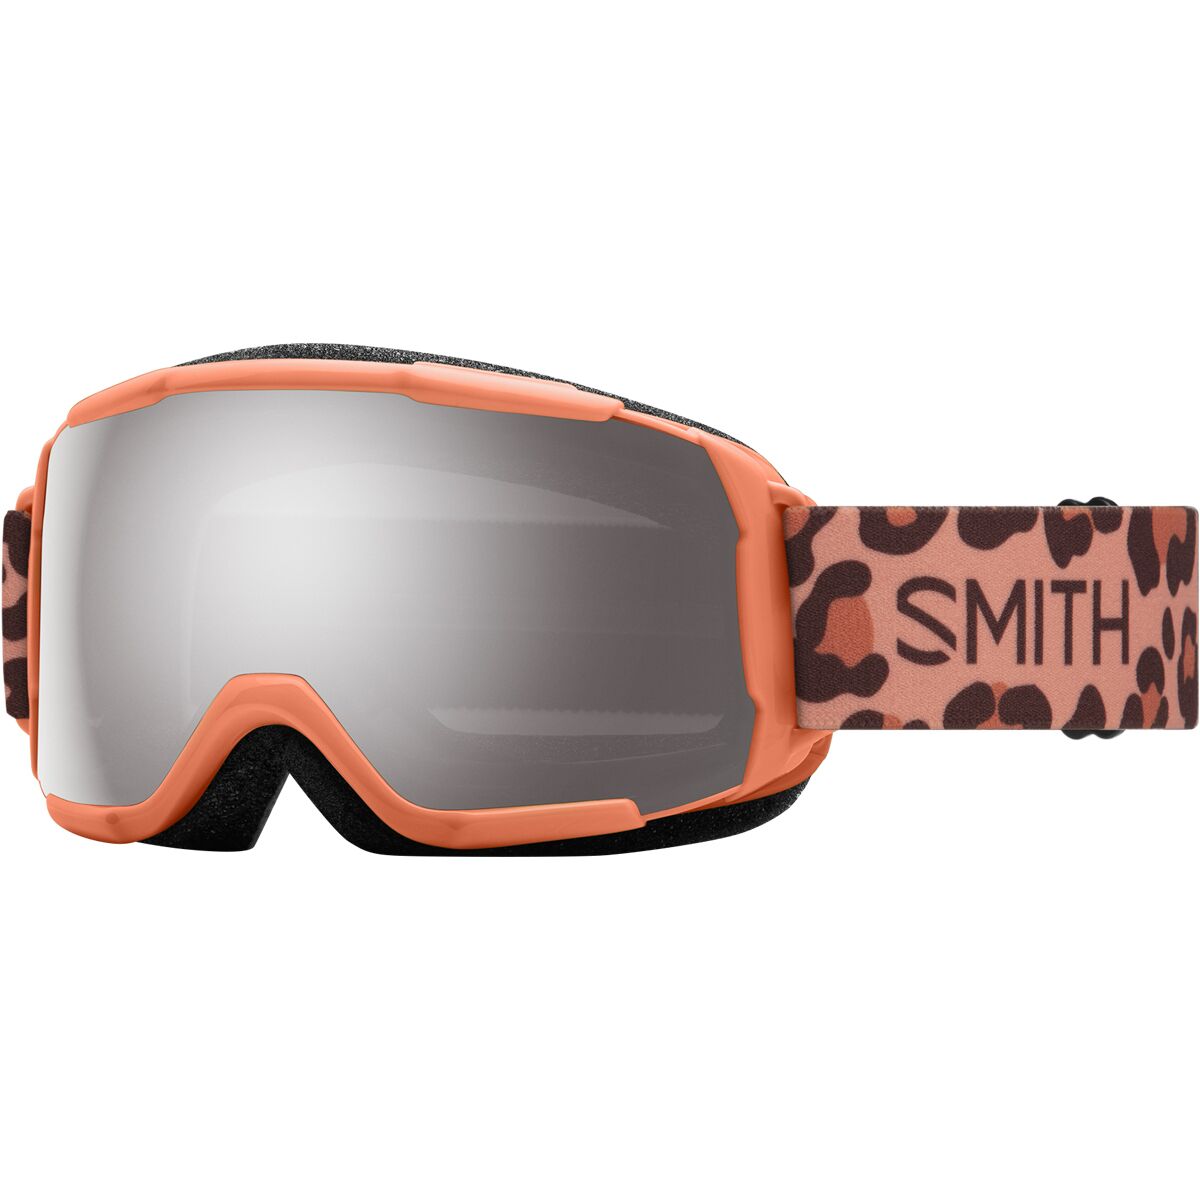 Smith Grom ChromaPop Goggles - Kids' Coral Cheetah Print